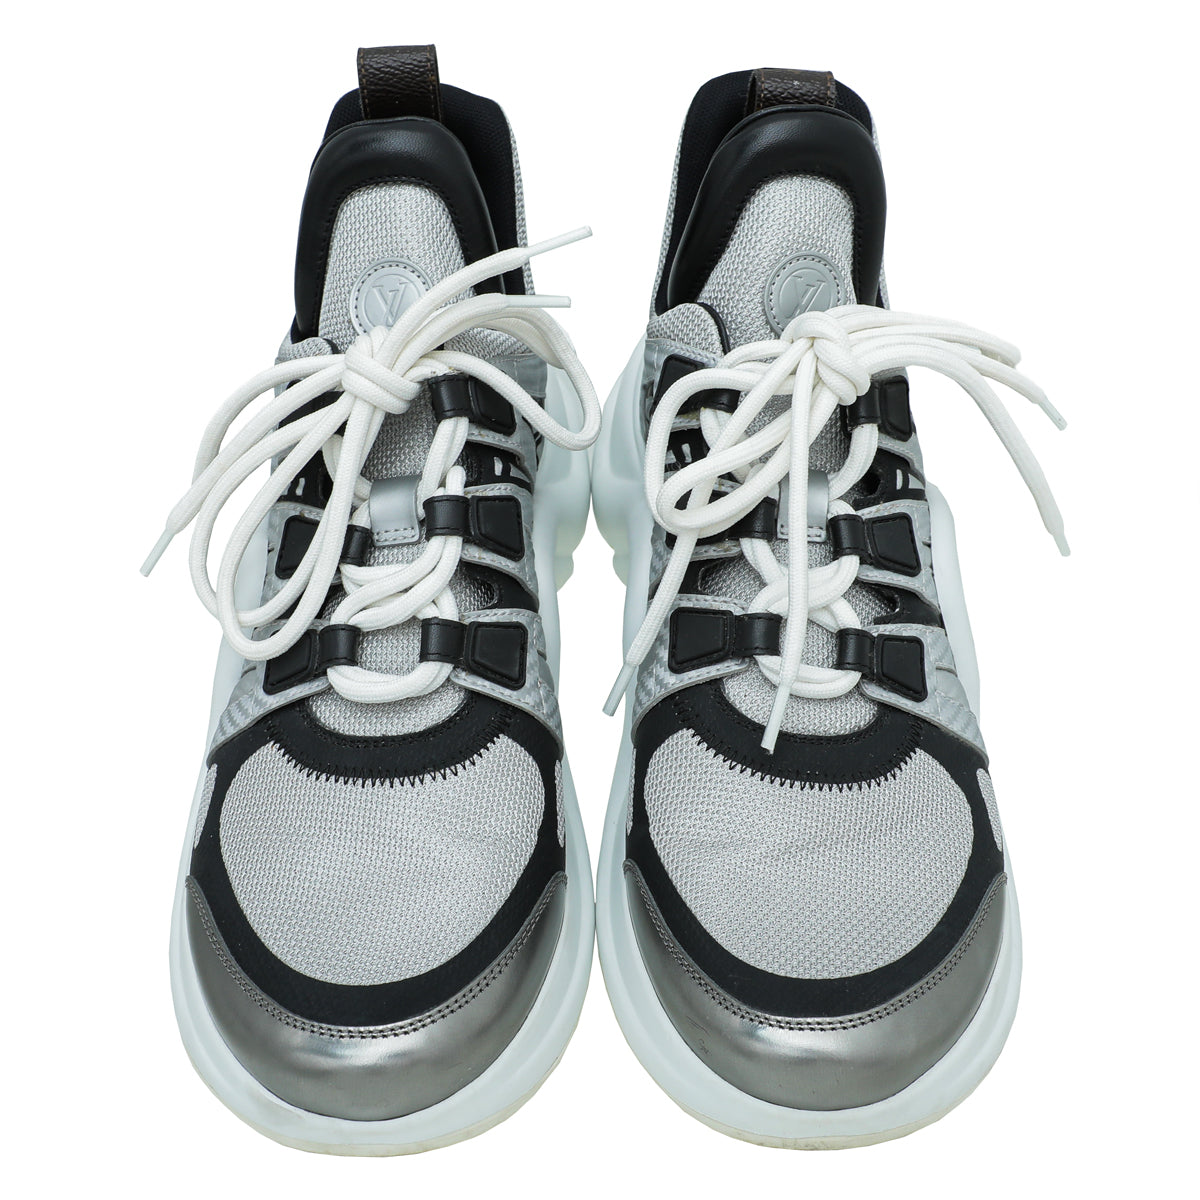 Louis Vuitton LV Archlight Sneaker, Grey, 39.5